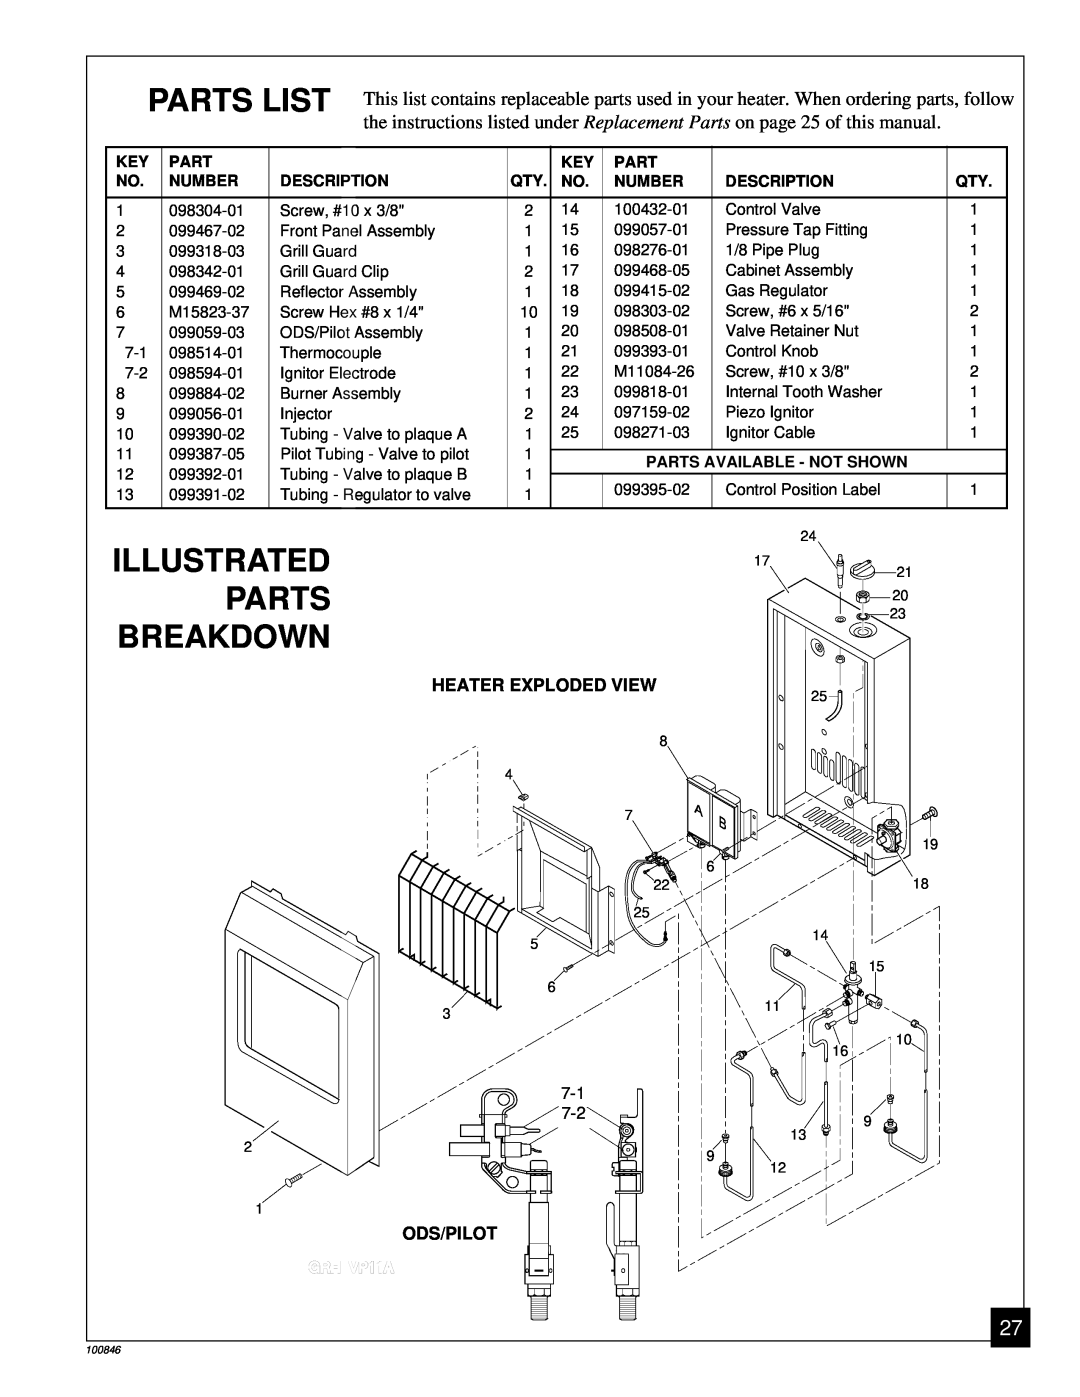 Desa CGP11A installation manual Parts List, Illustrated Parts Breakdown 